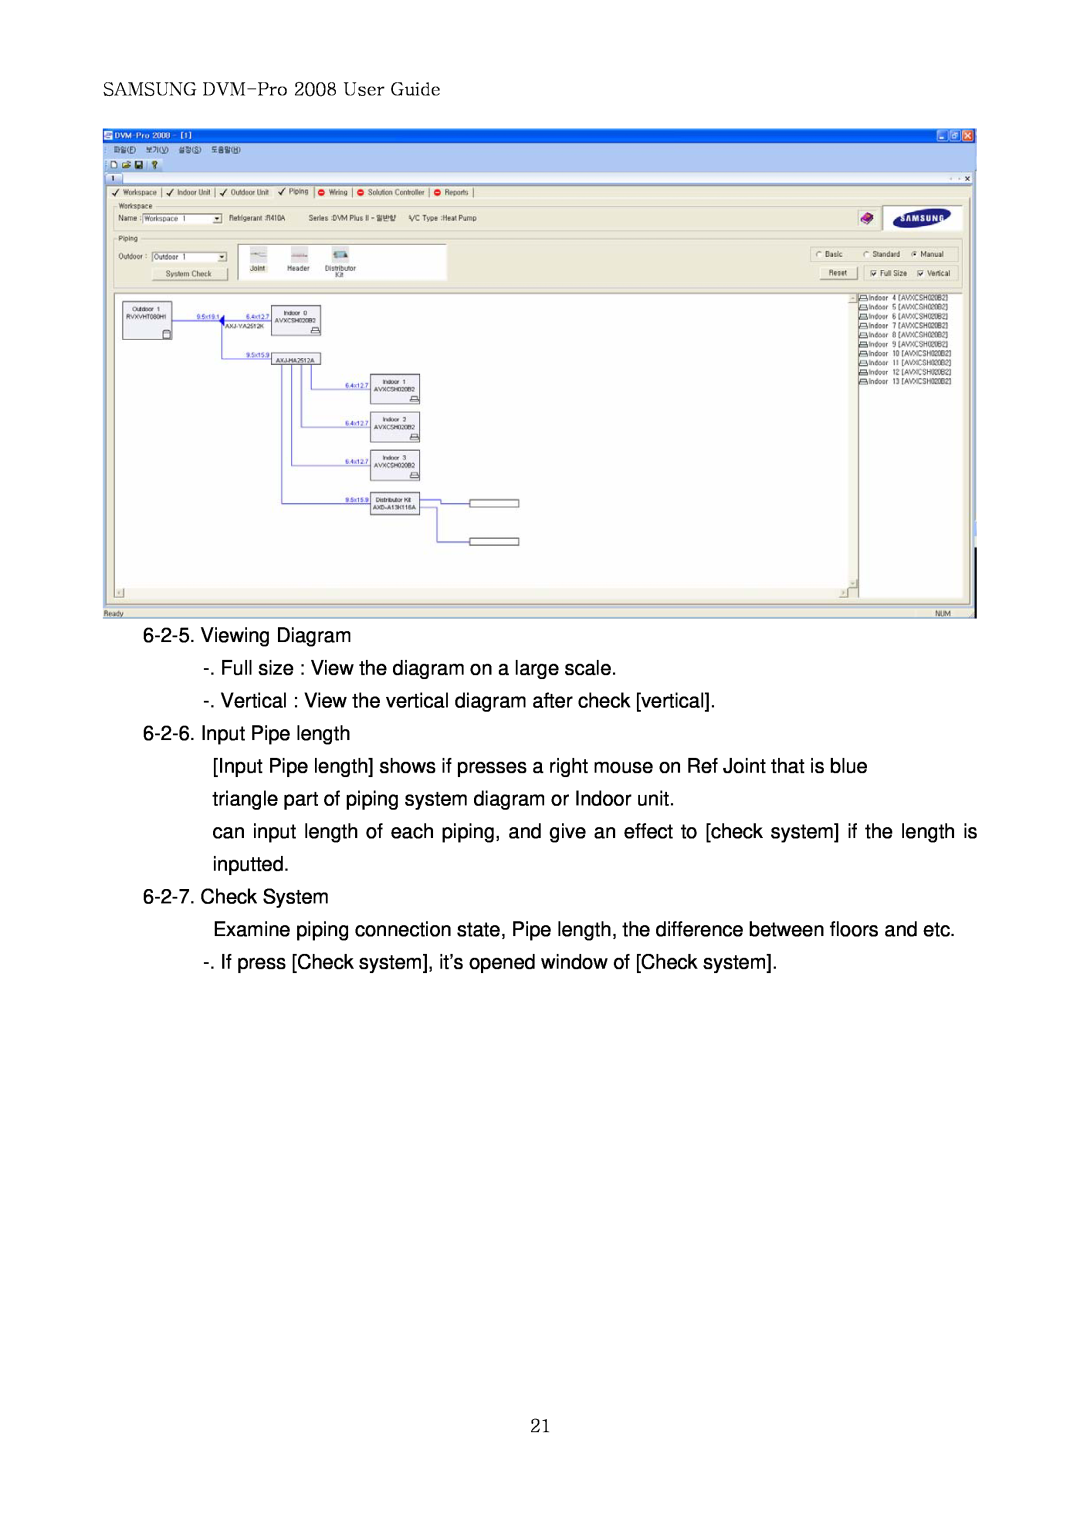 Samsung DVM-PRO 2008 user manual Viewing Diagram 